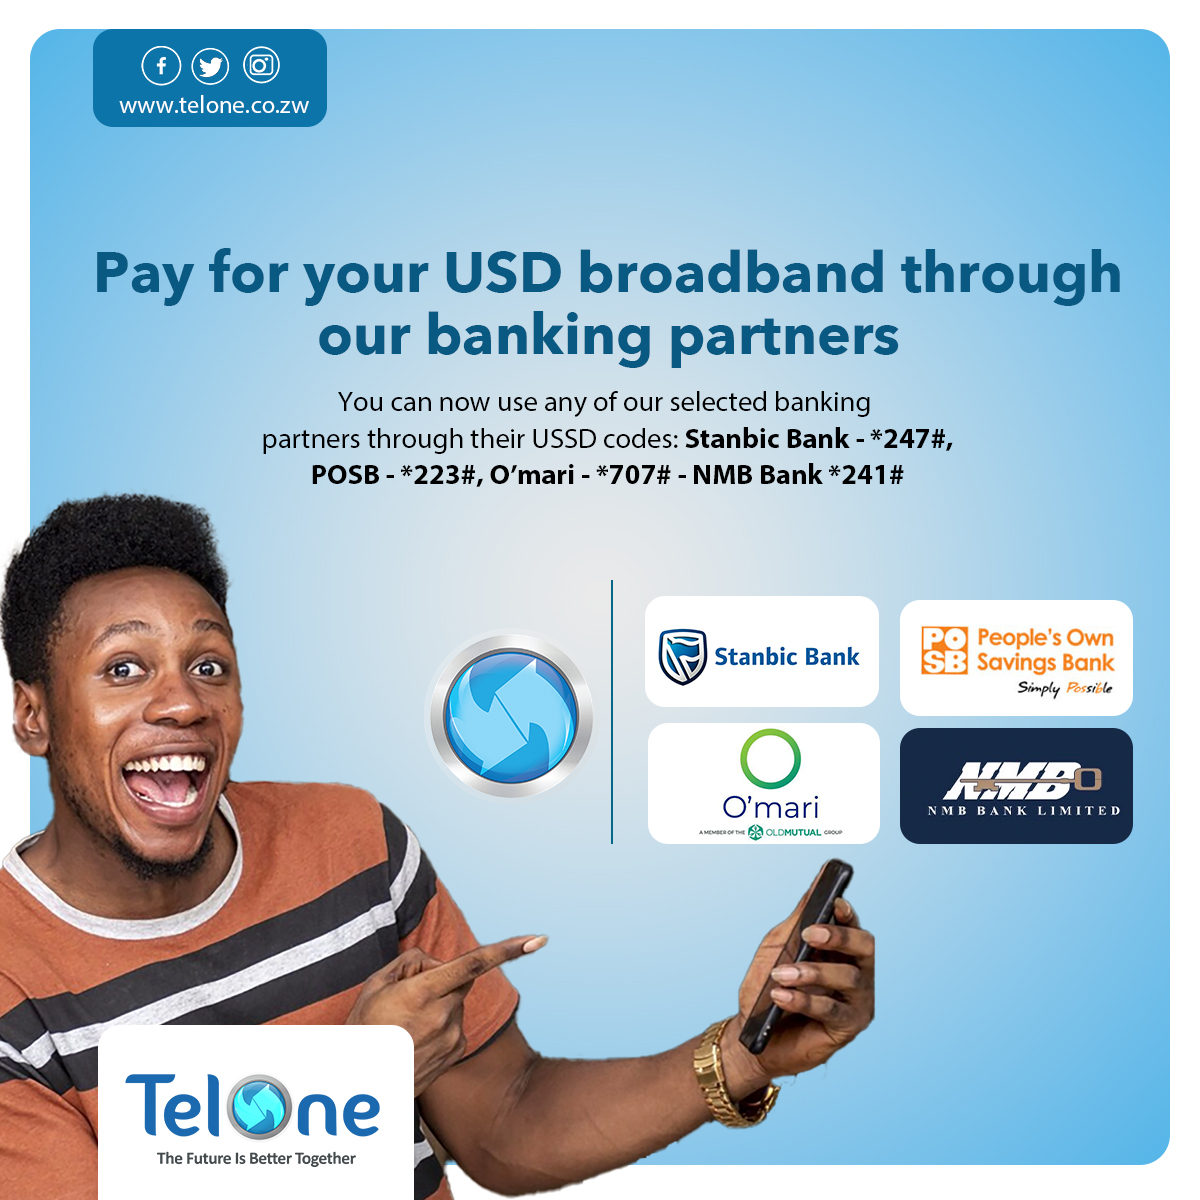 Top up your USD broadband through our banking partner's. ✅Stanbic Bank ✅People's Own Saving Bank ✅O'mari ✅NMB Bank